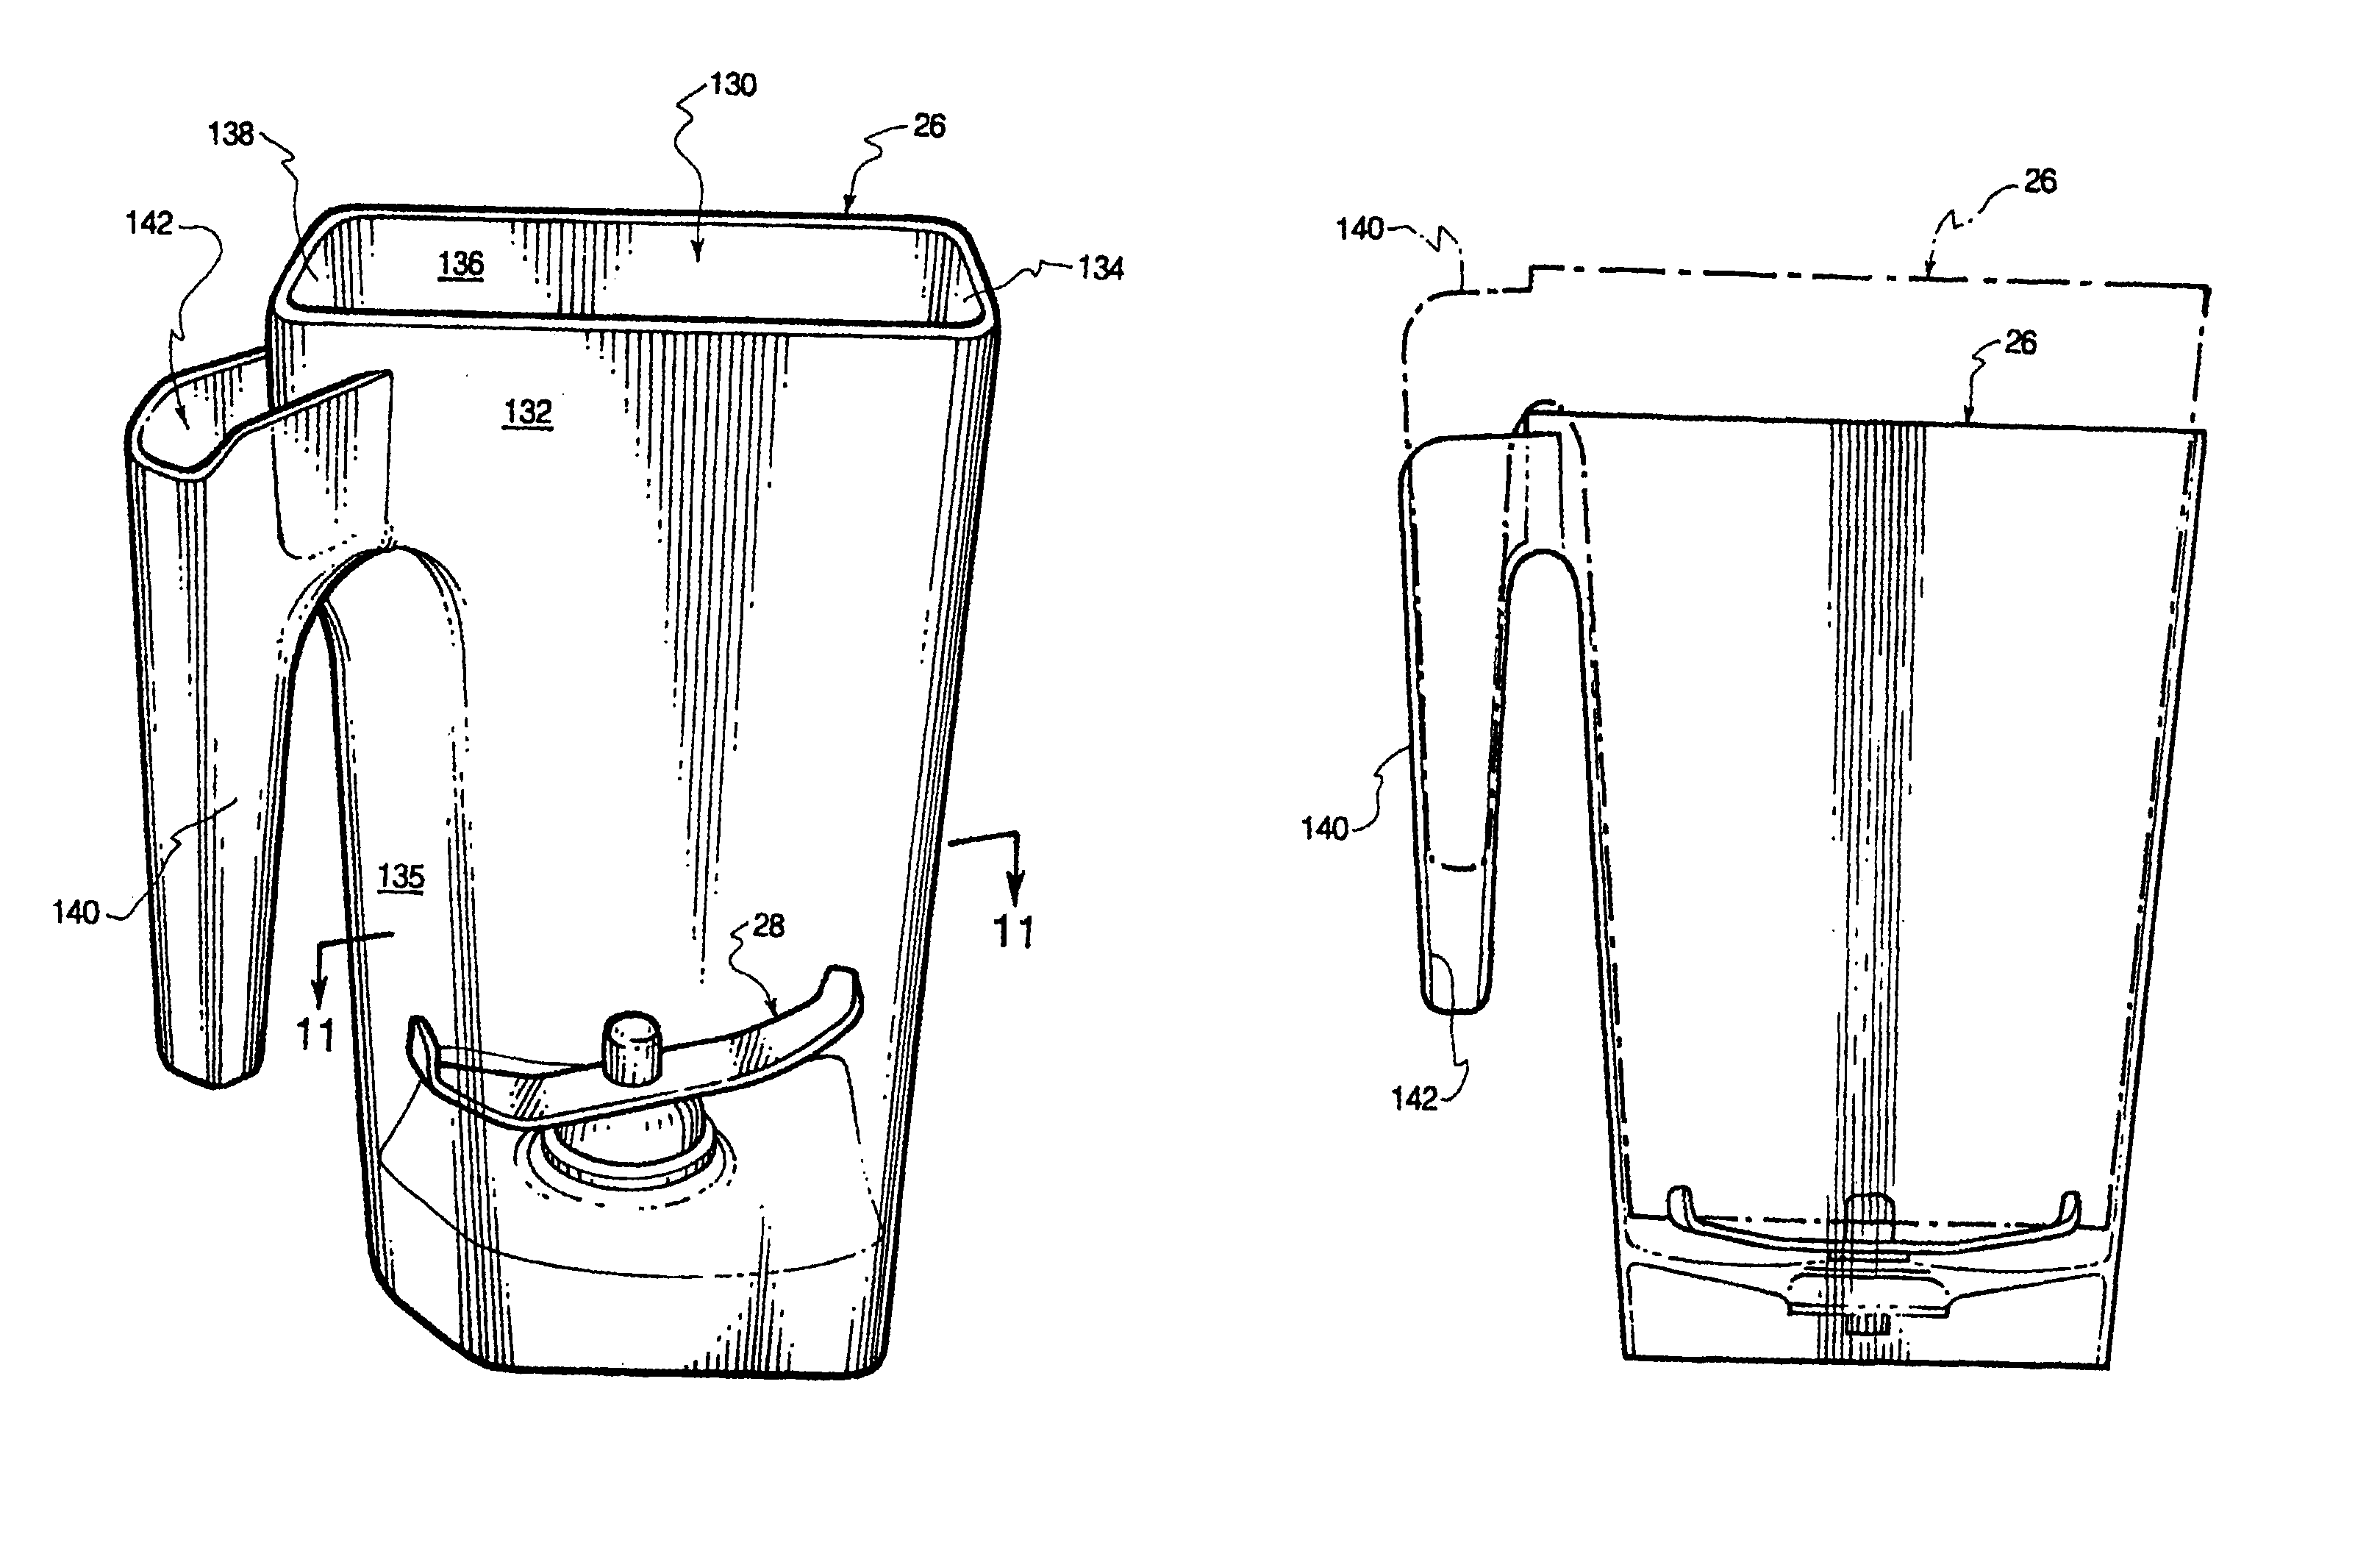 Nestable blending jar apparatus